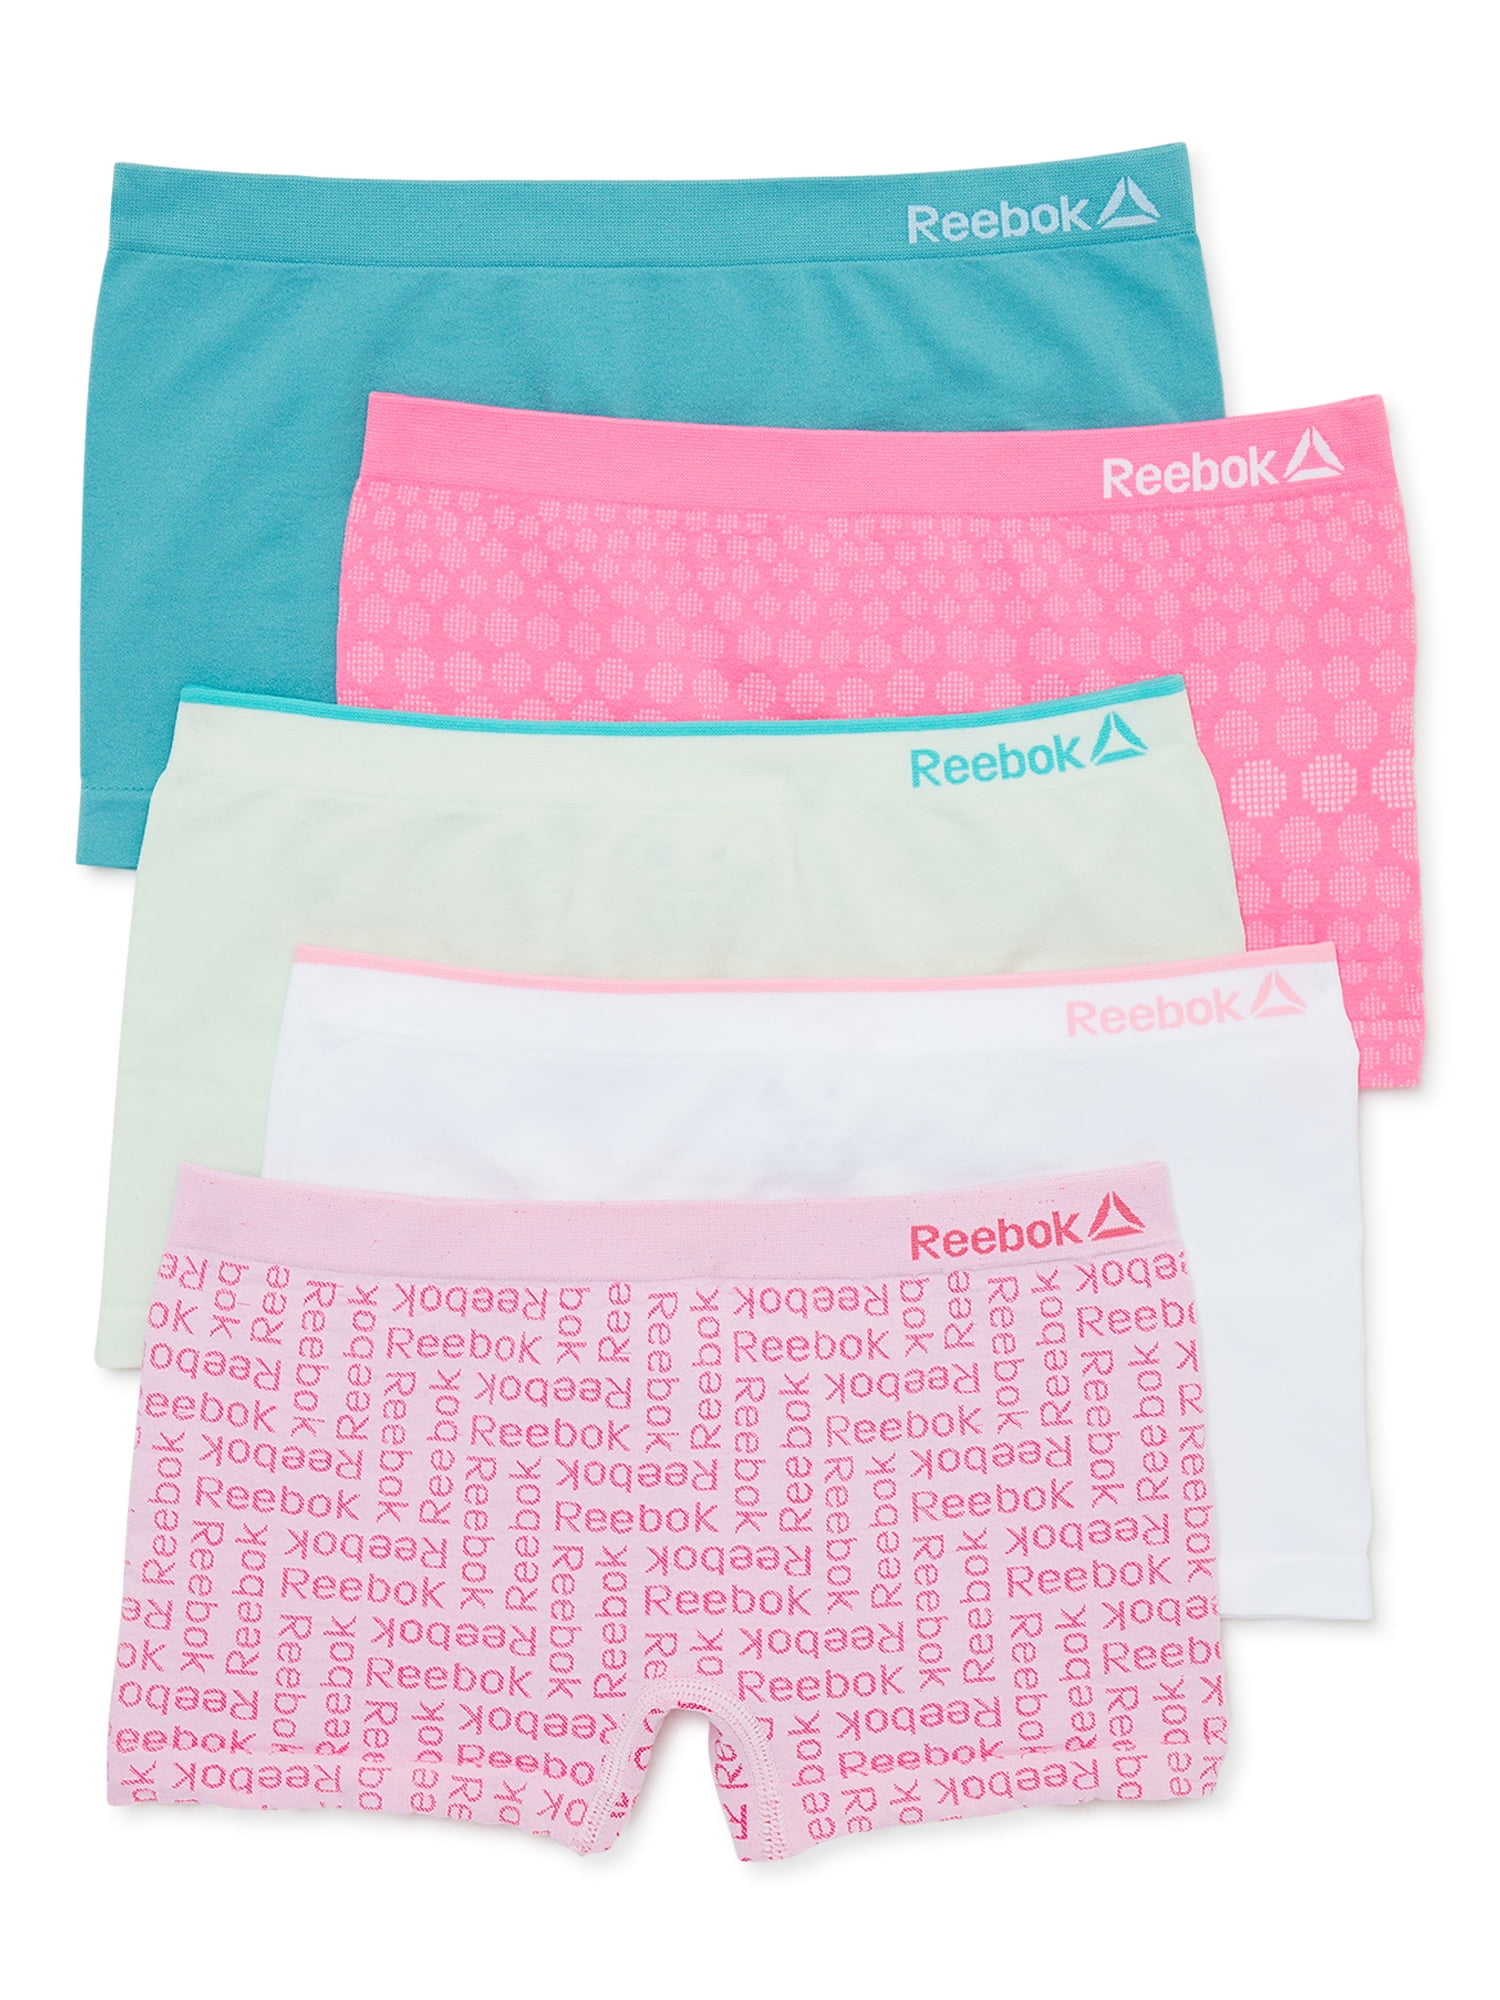 Reebok Girls Seamless Boyshort Panties Underwear, 5-Pack, Sizes S-XL 